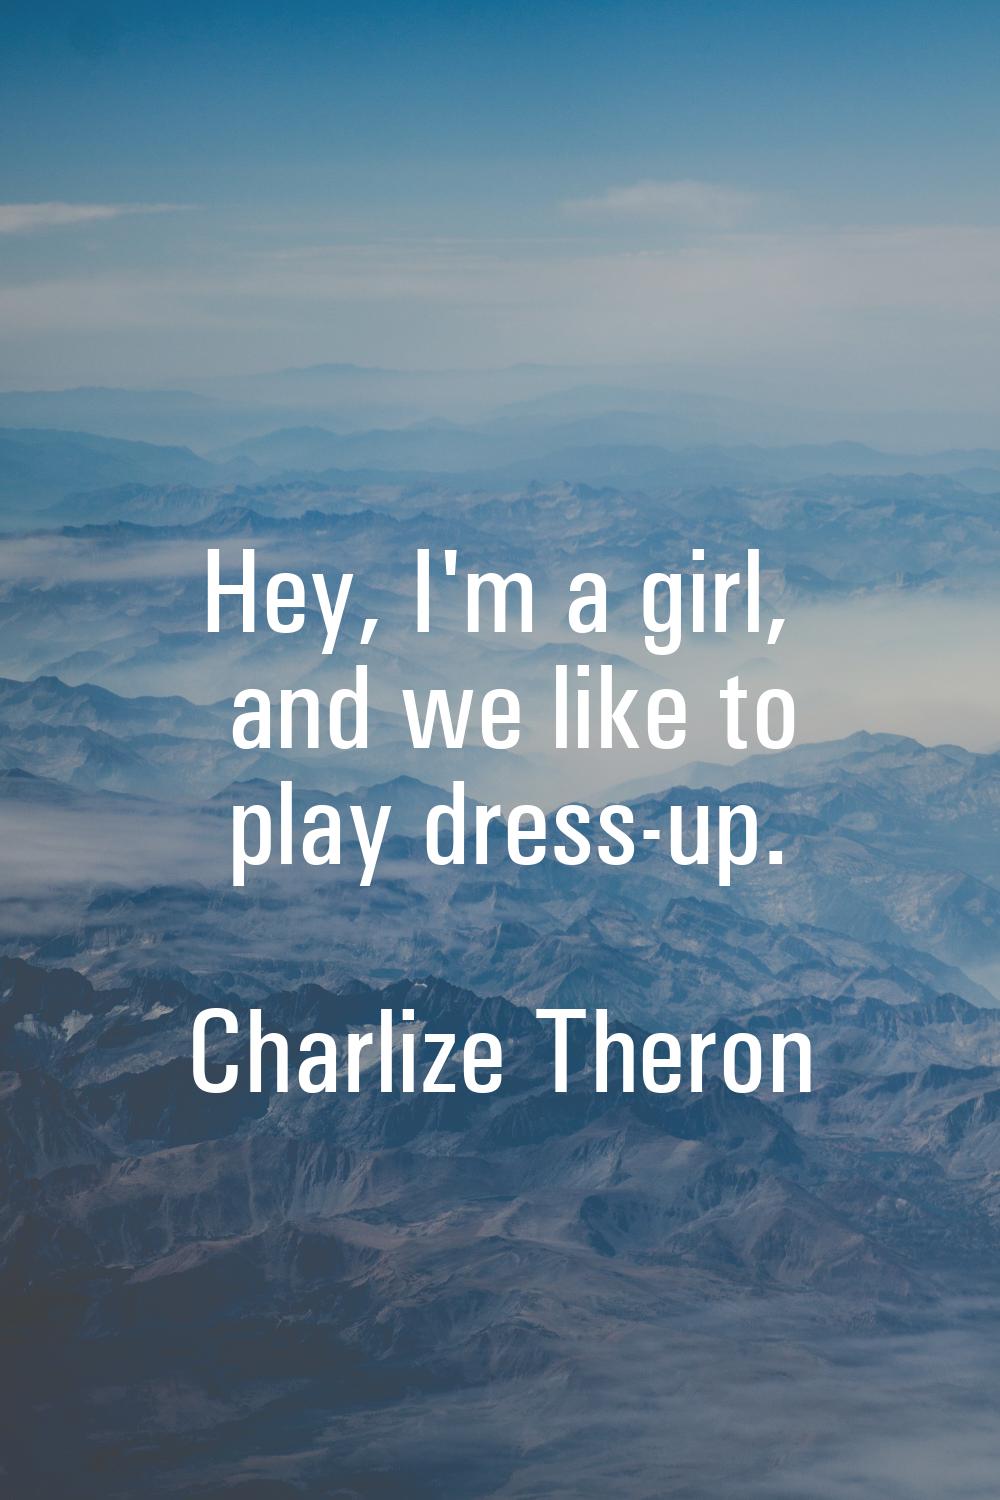 Hey, I'm a girl, and we like to play dress-up.